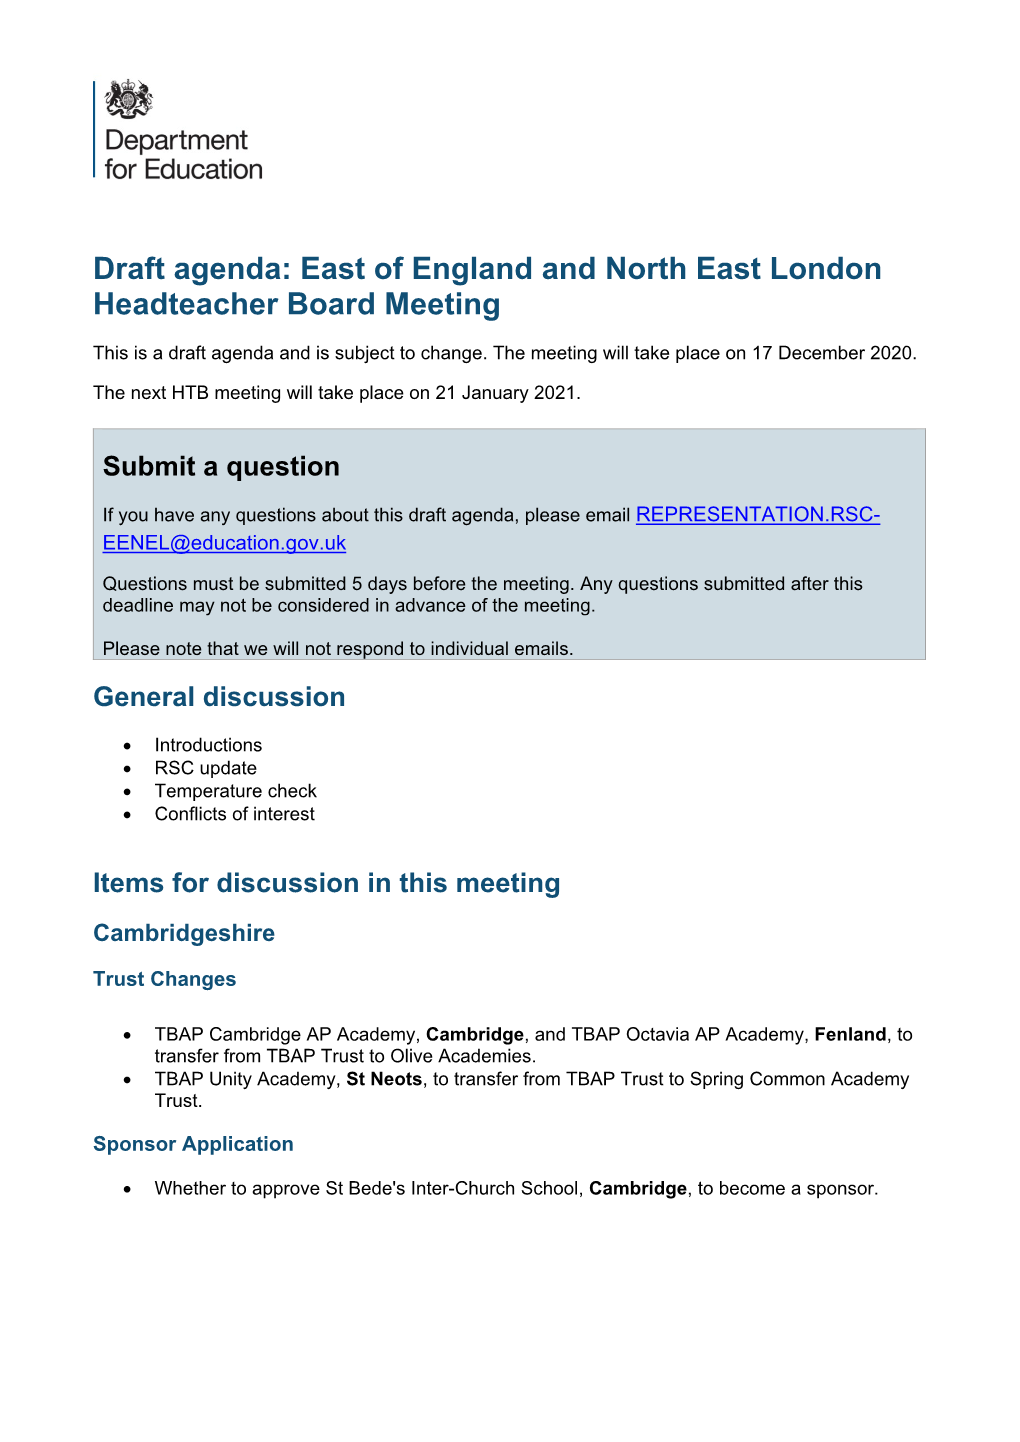 Draft Agenda: East of England and North East London Headteacher Board Meeting